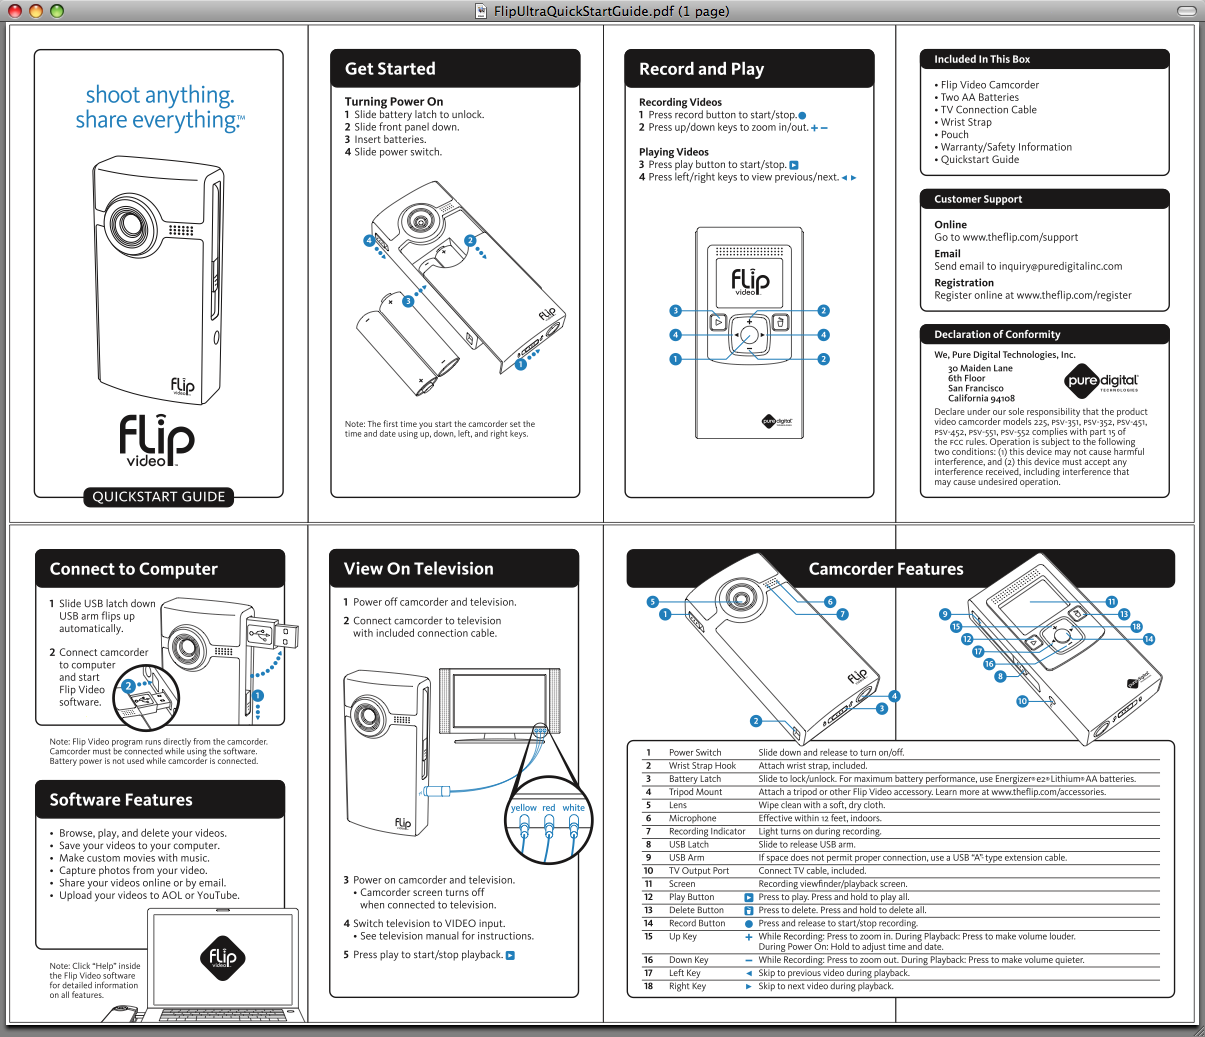 armitron instruction manual pdf